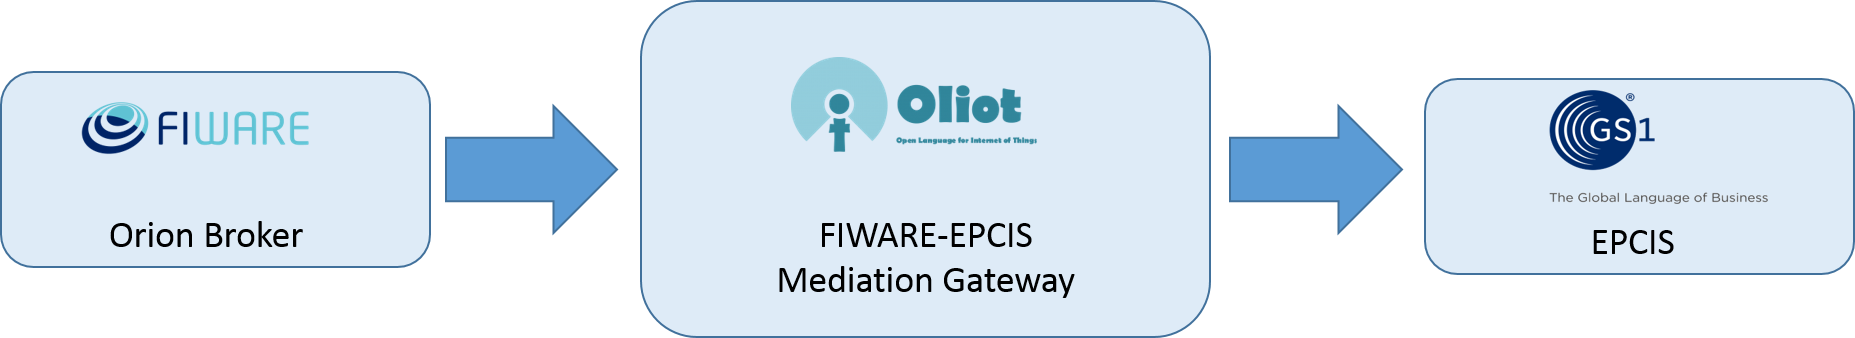 _images/FIware_EPCIS_Mediation_Gateway.png